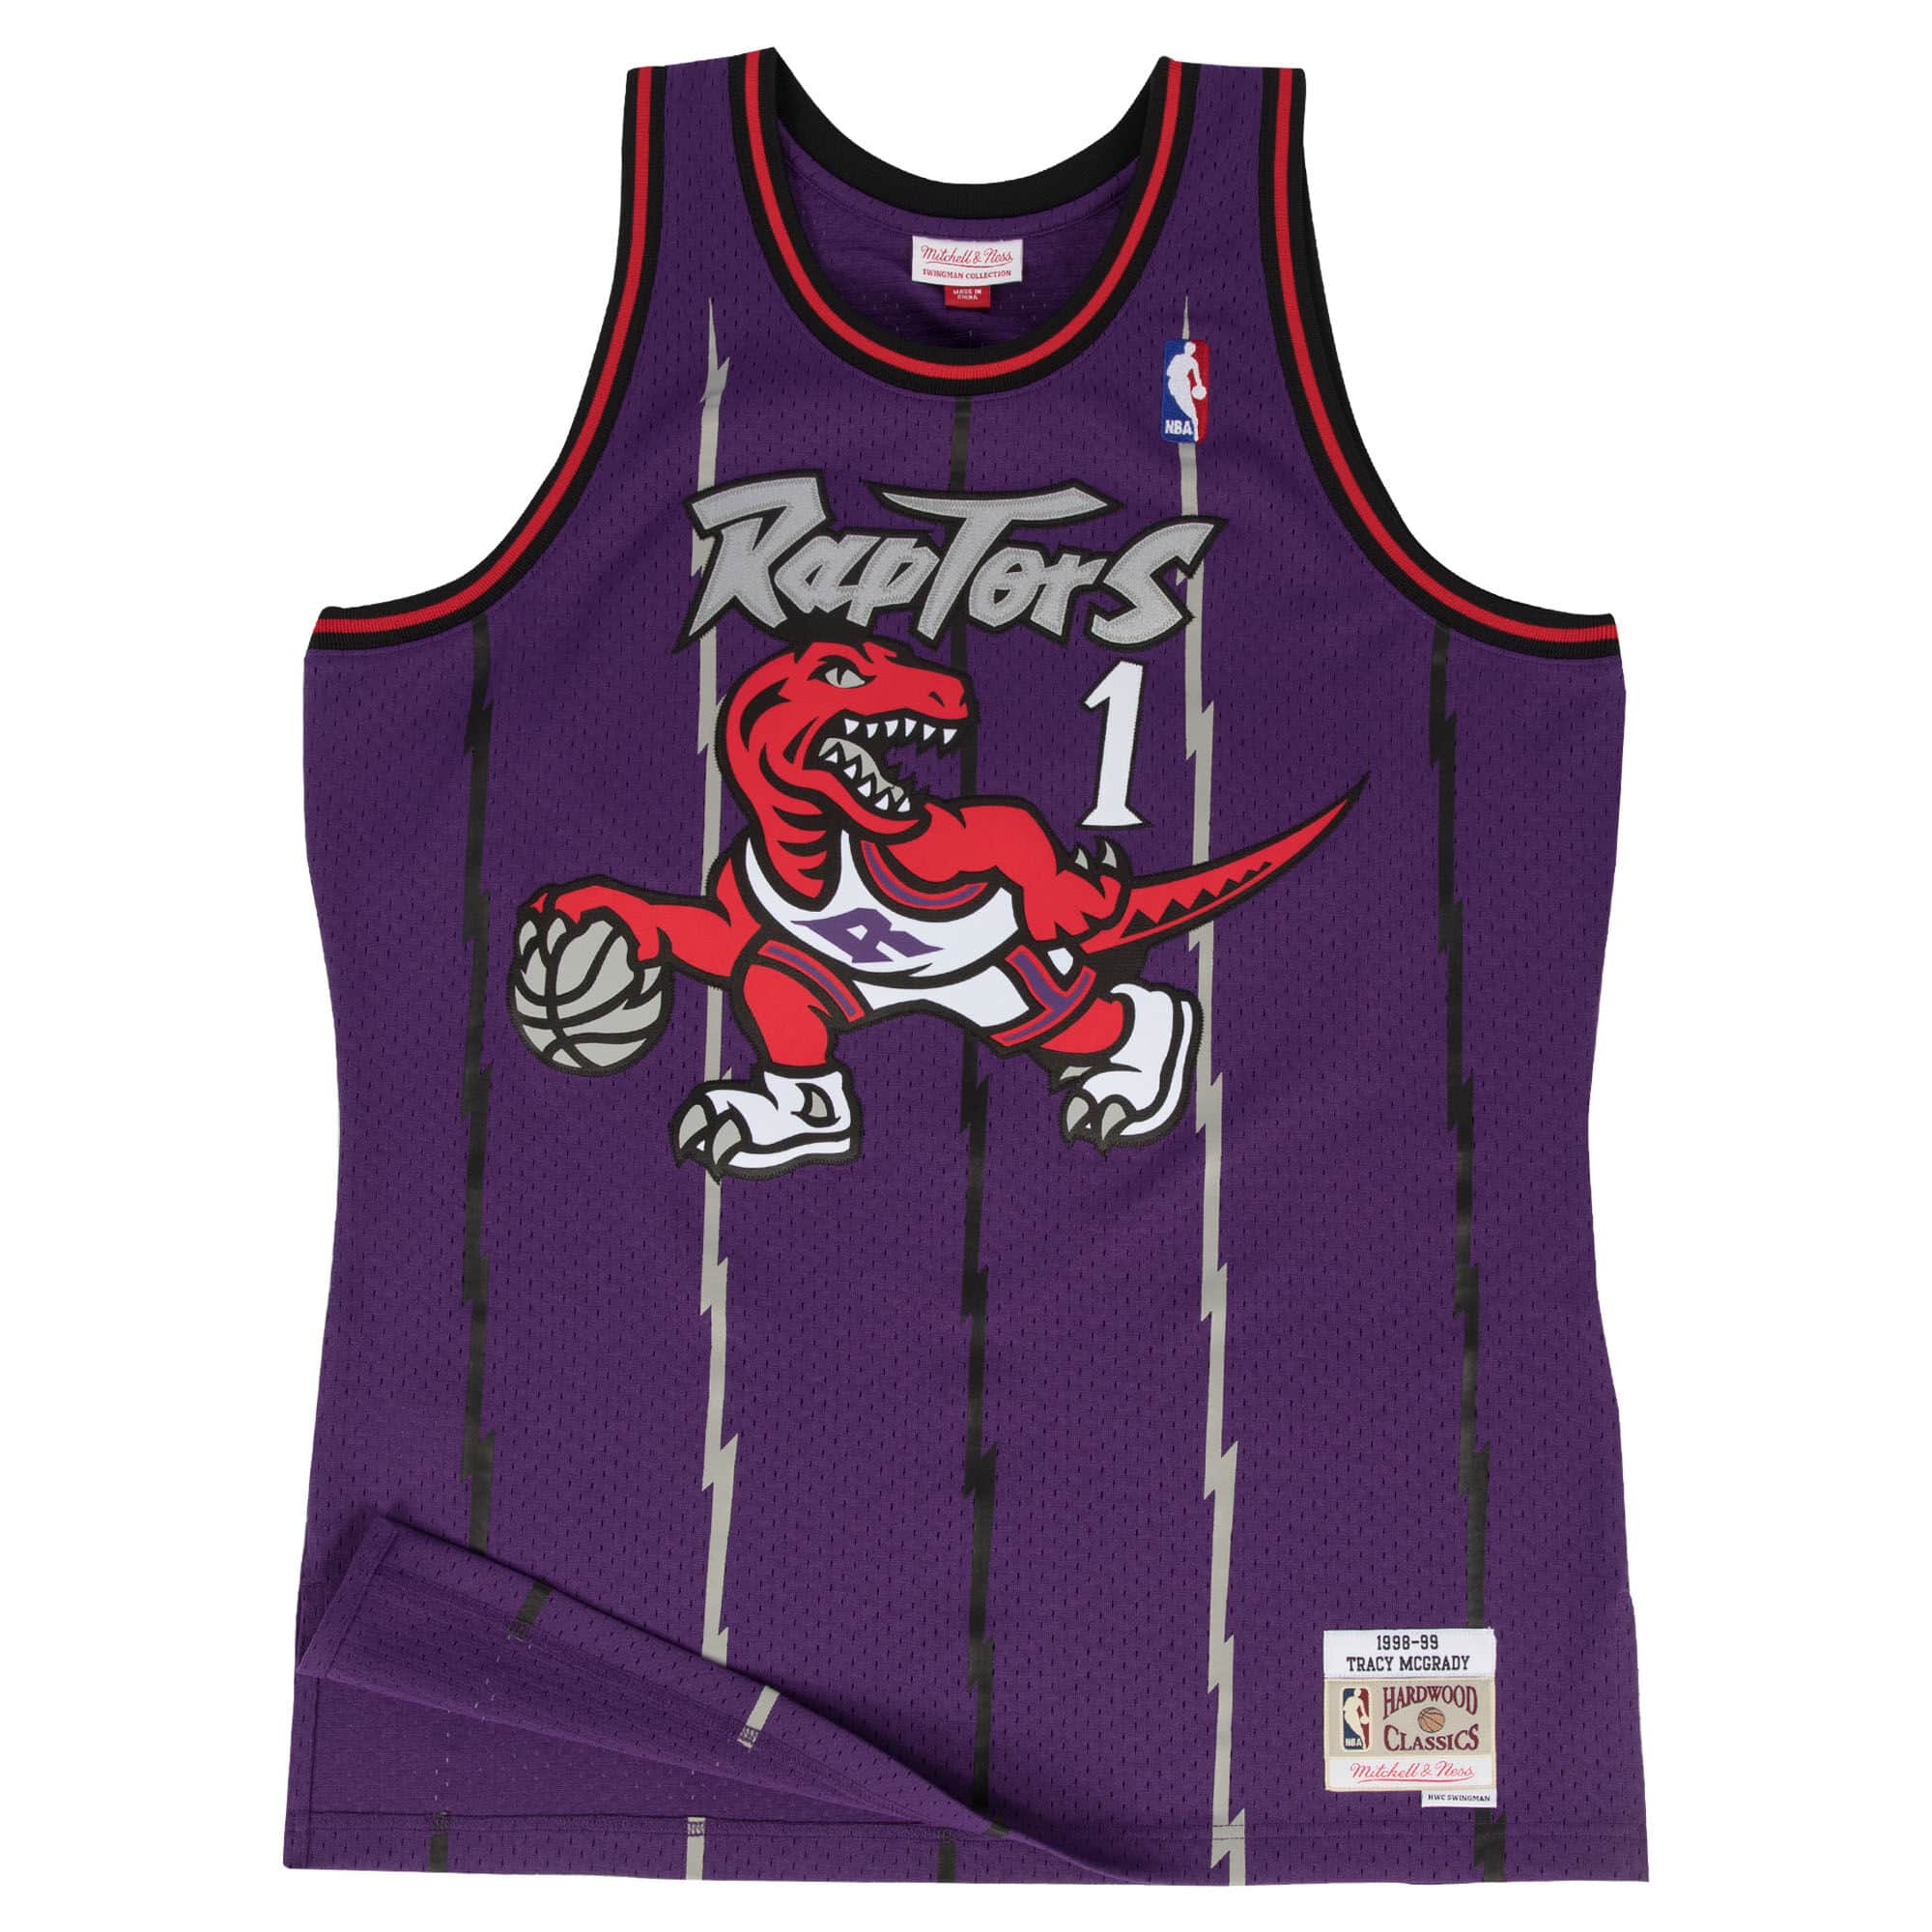 The new Toronto Raptors Hardwood Classic dinosaur jerseys have